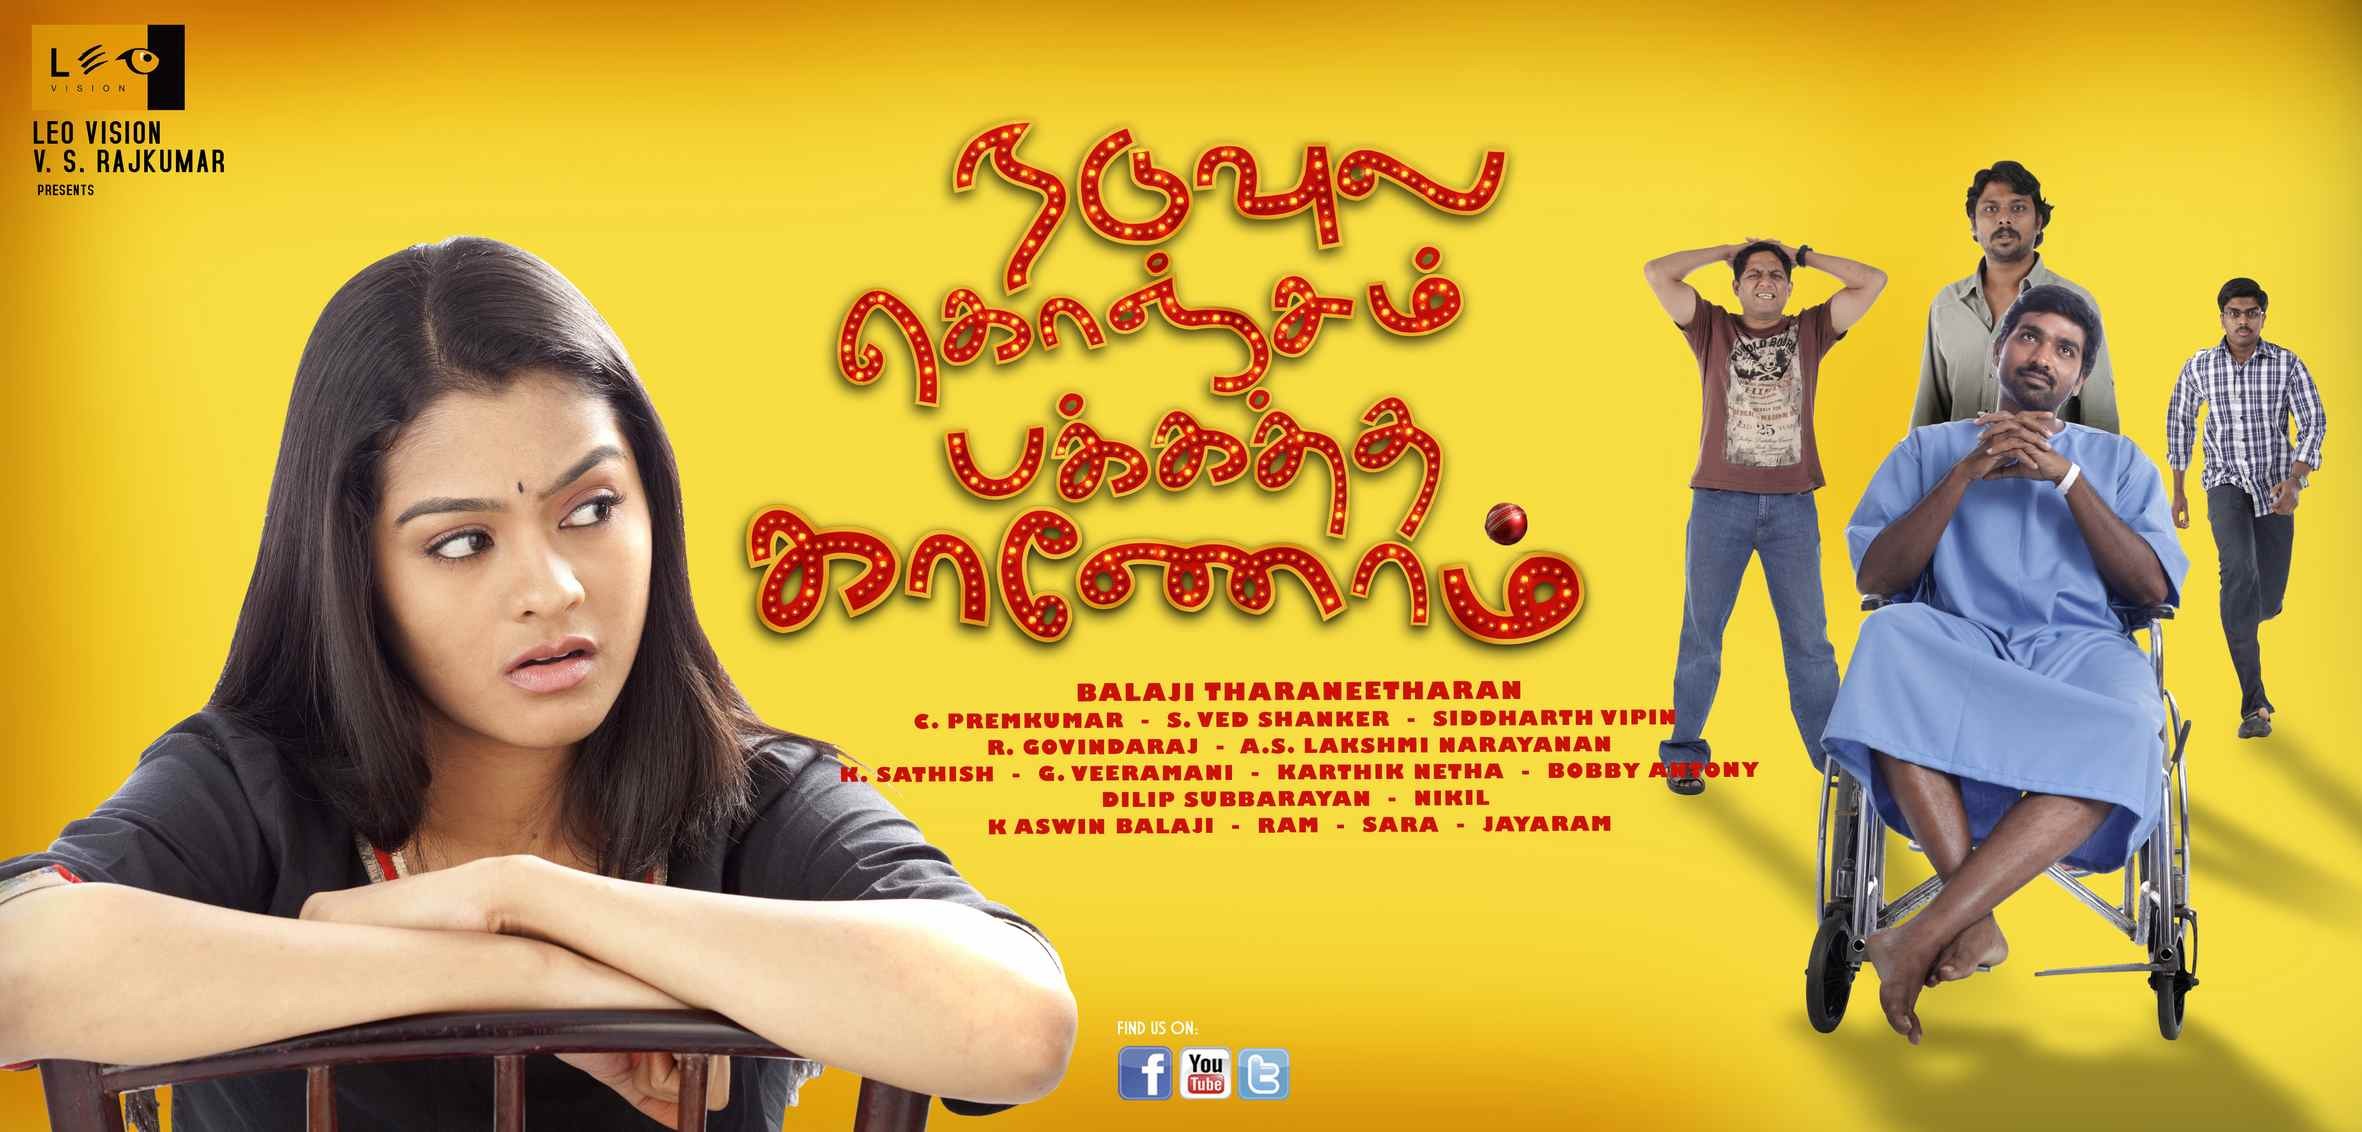 Mega Sized Movie Poster Image for Naduvula Konjam Pakkatha Kaanom (#4 of 14)